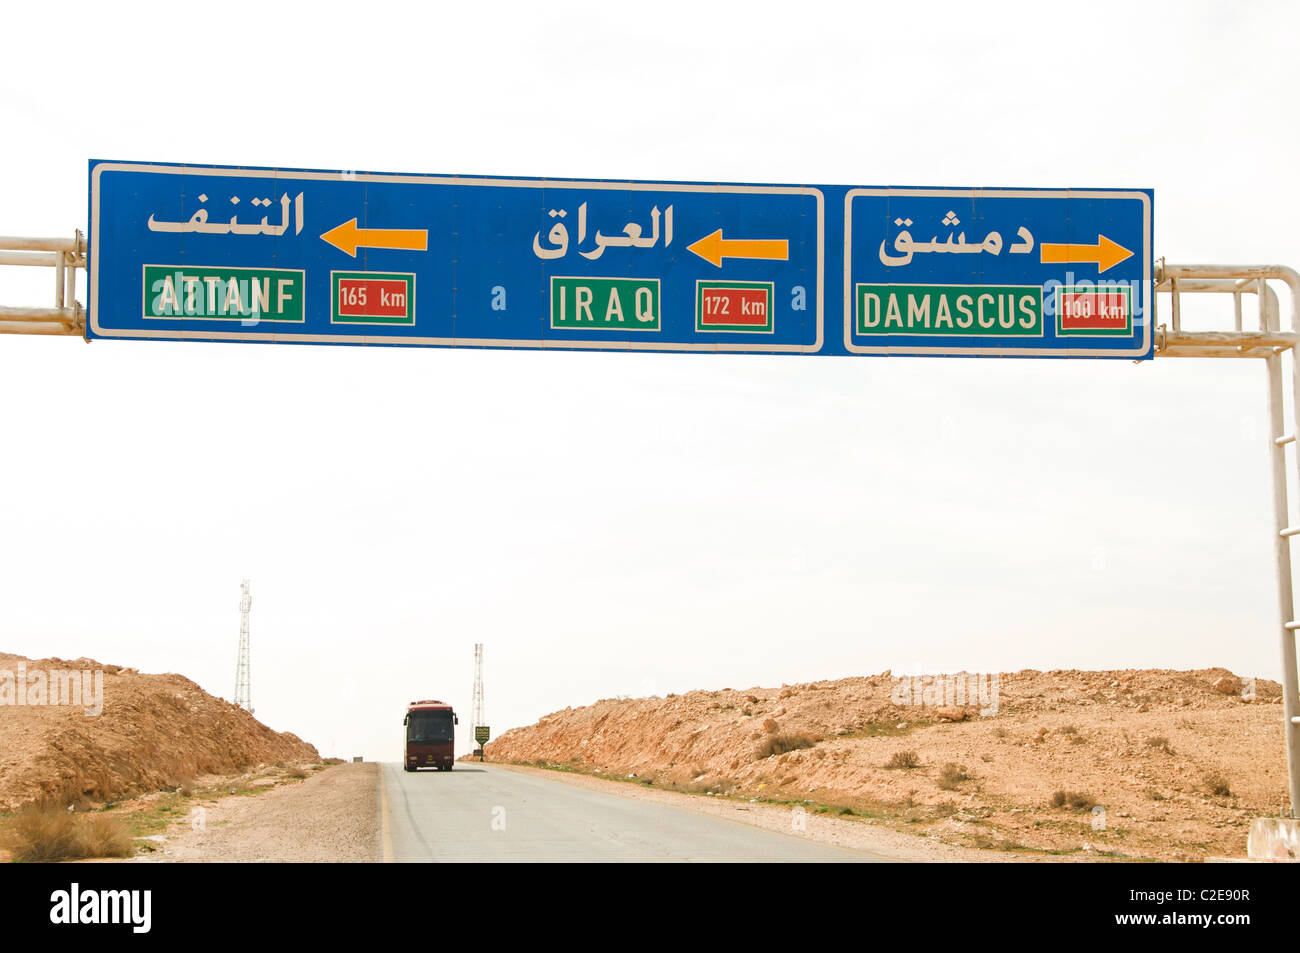 Damascus Iraq Attane Syria Road traffic Sign truck Stock Photo